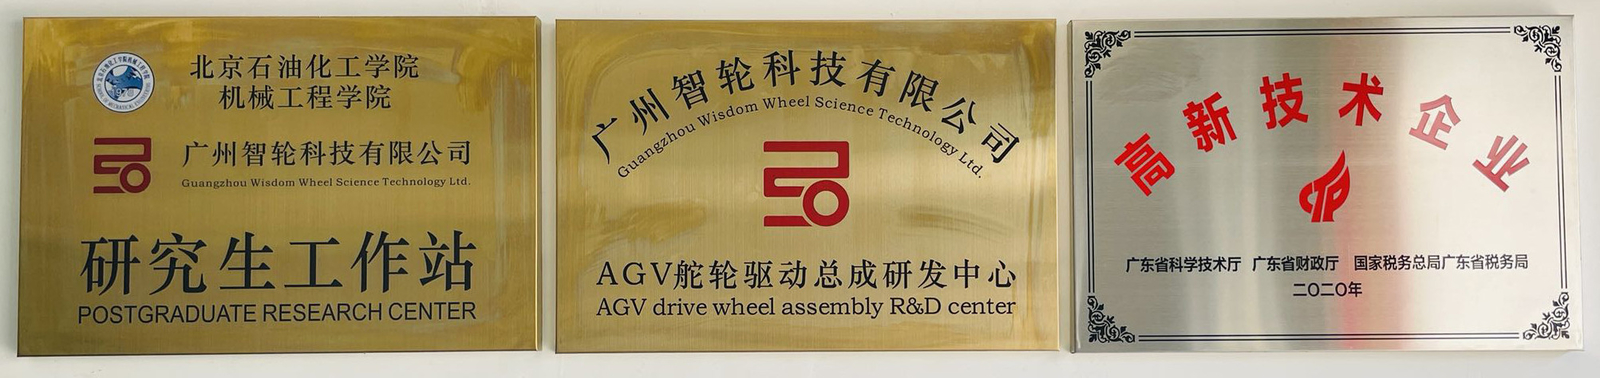 Guangzhou Wisdom Wheel Science Technology Ltd. factory production line